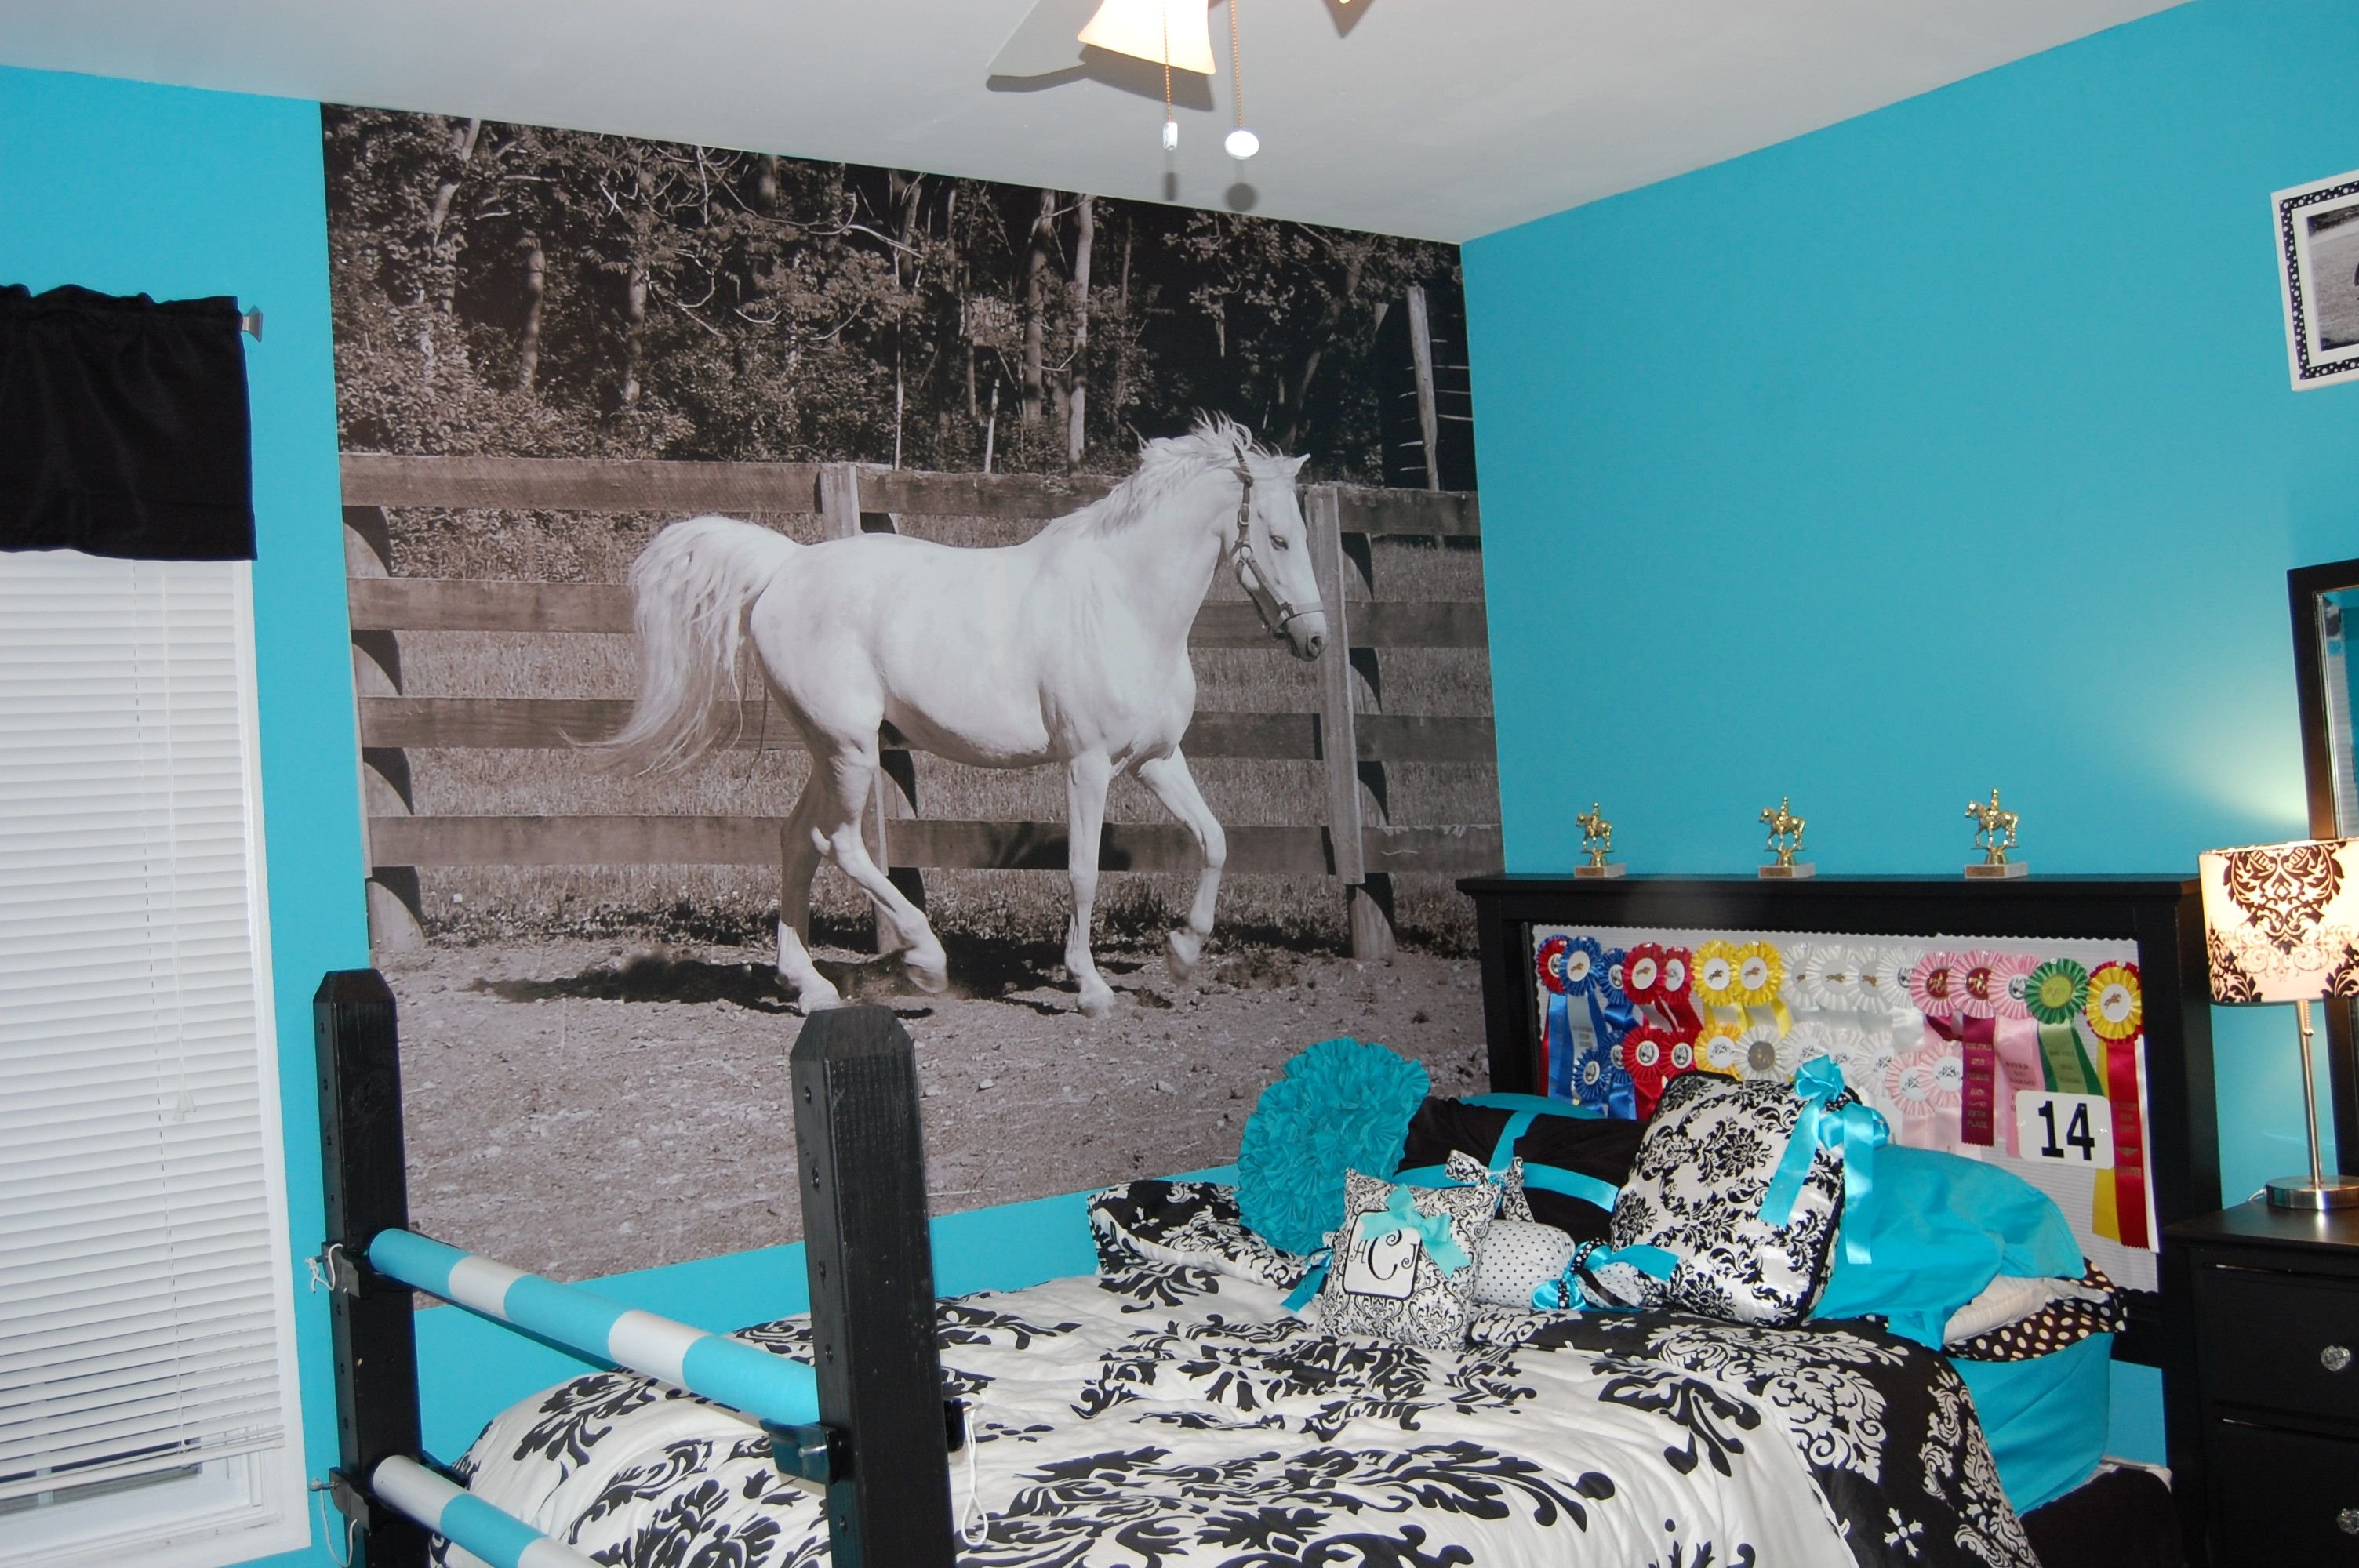 Комнаты кск. Комната в стиле лошадей. Детская комната с лошадьми. Комната в конном стиле. Лошади в интерьере.